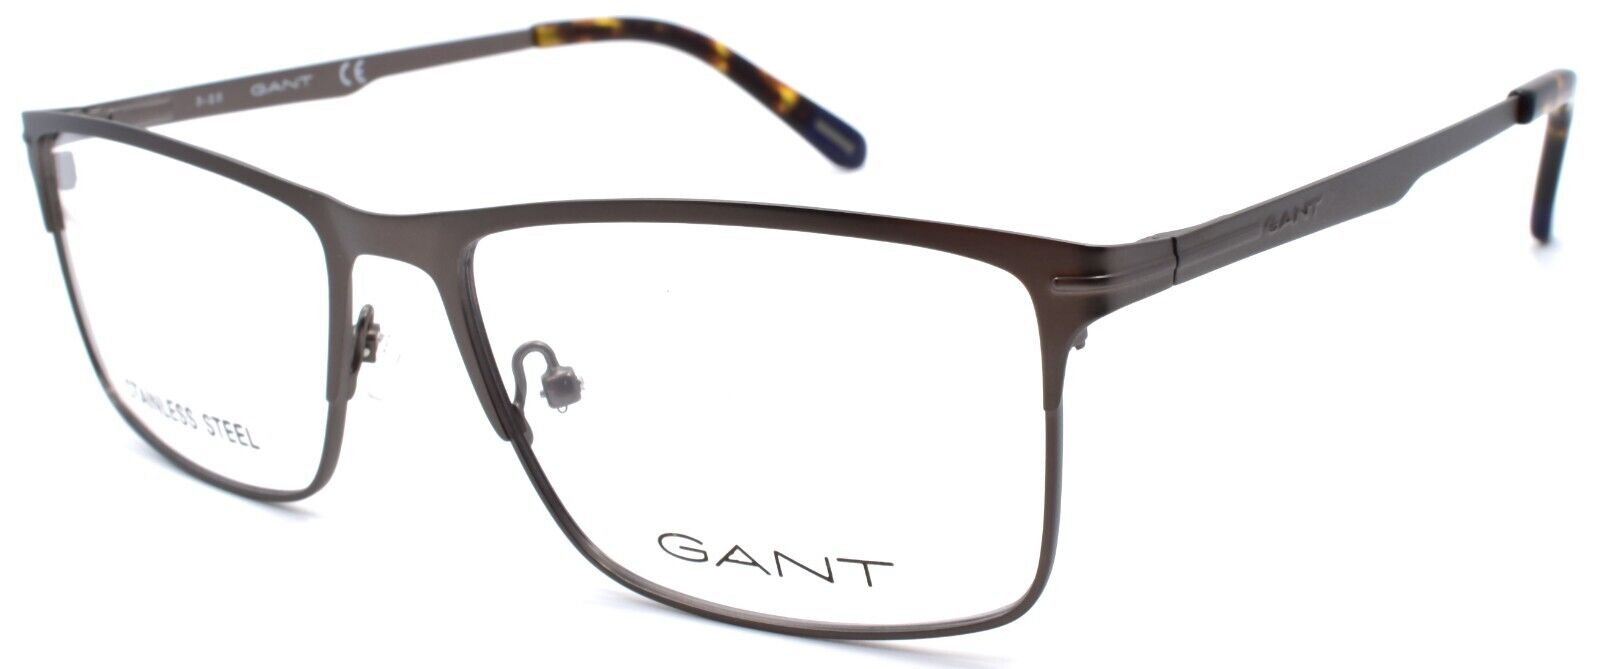 1-GANT GA3128 009 Men's Eyeglasses Frames 57-17-145 Matte Gunmetal-664689845415-IKSpecs